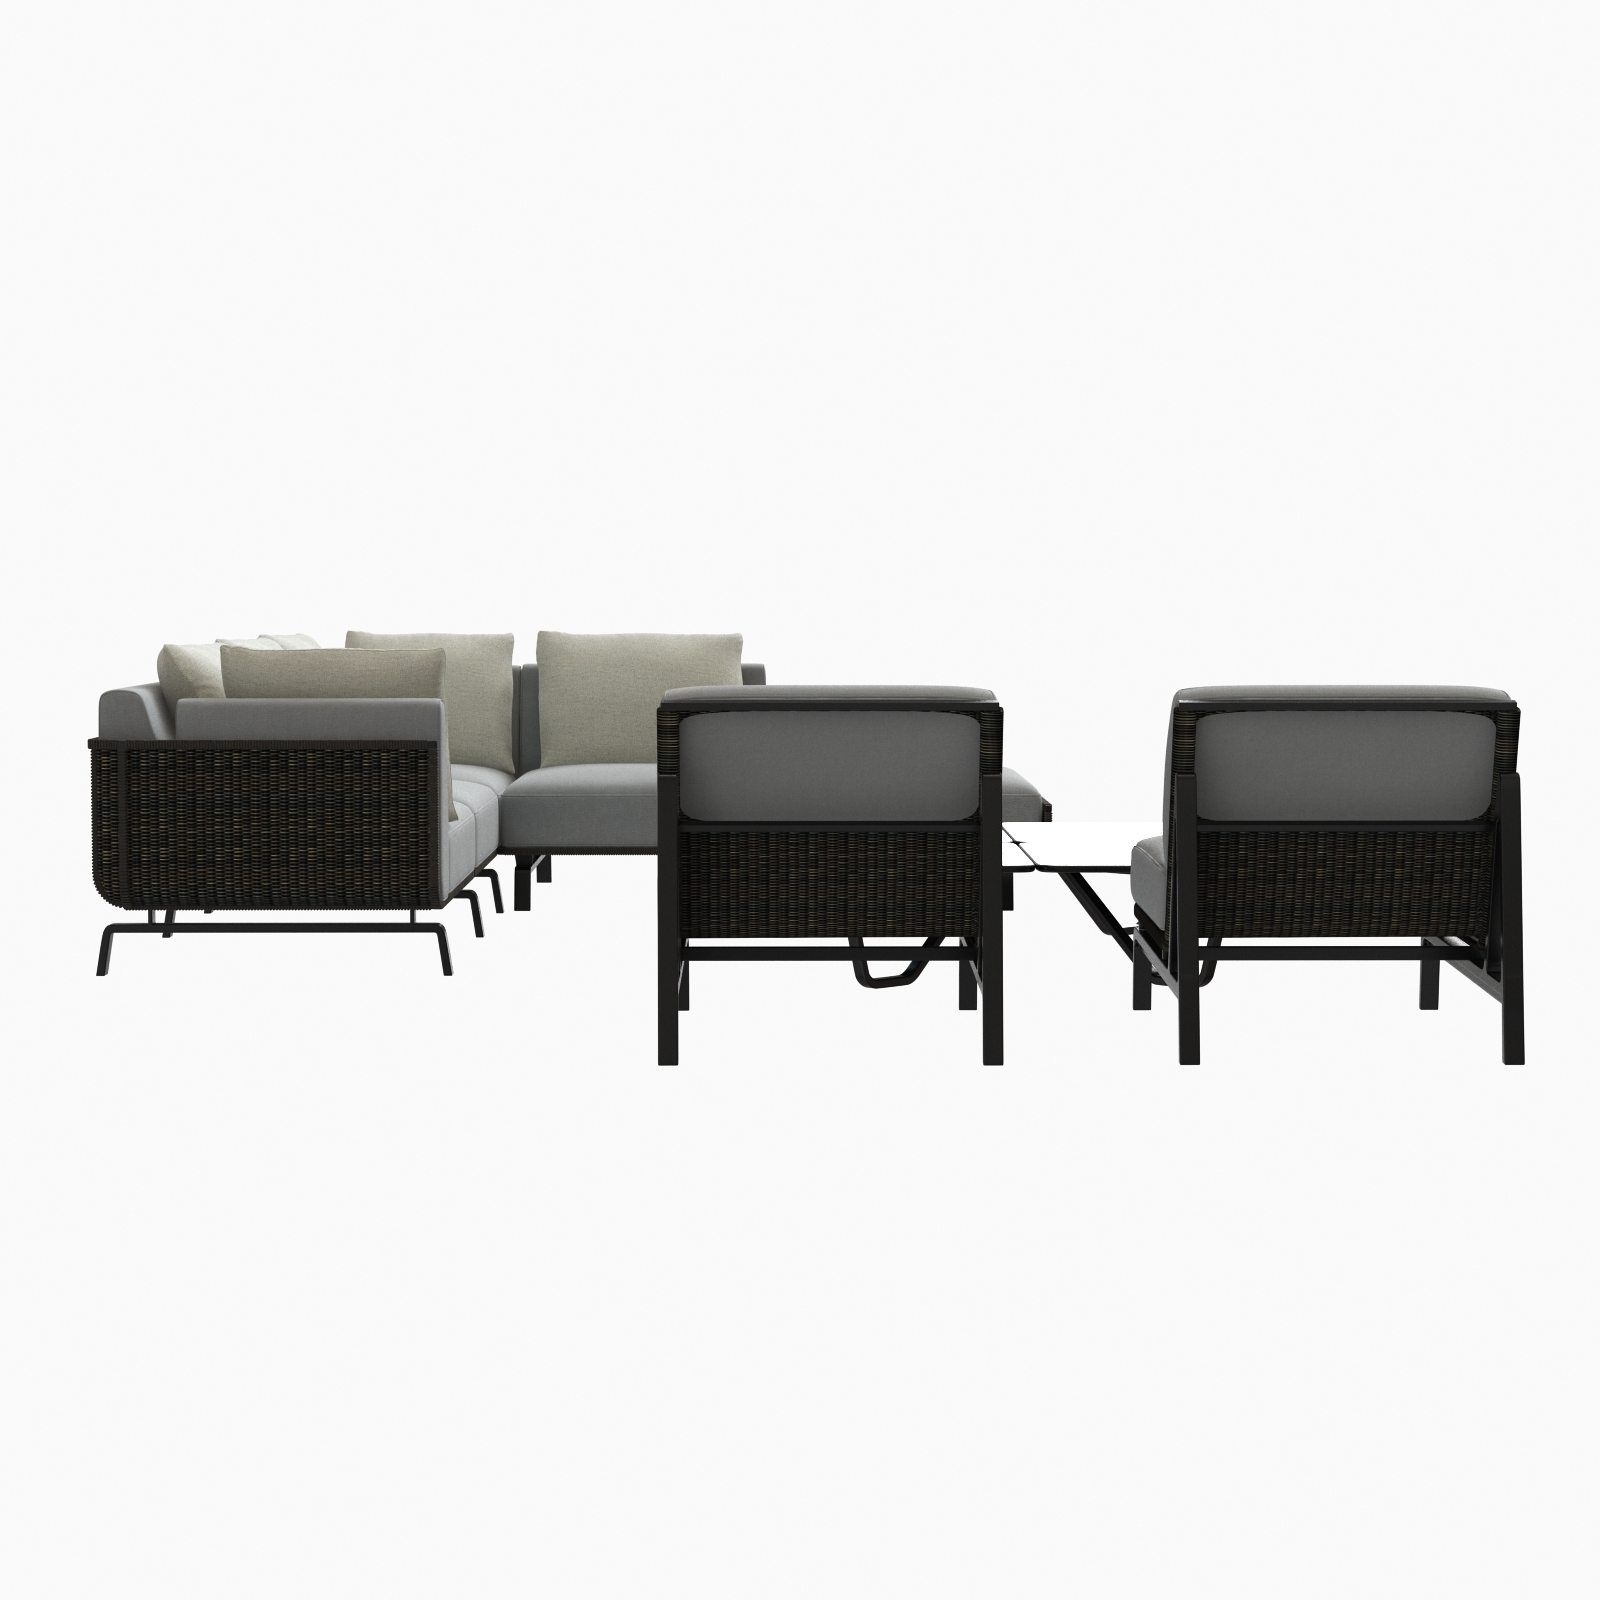 3D model tortuga set sofa chairs - TurboSquid 1432088